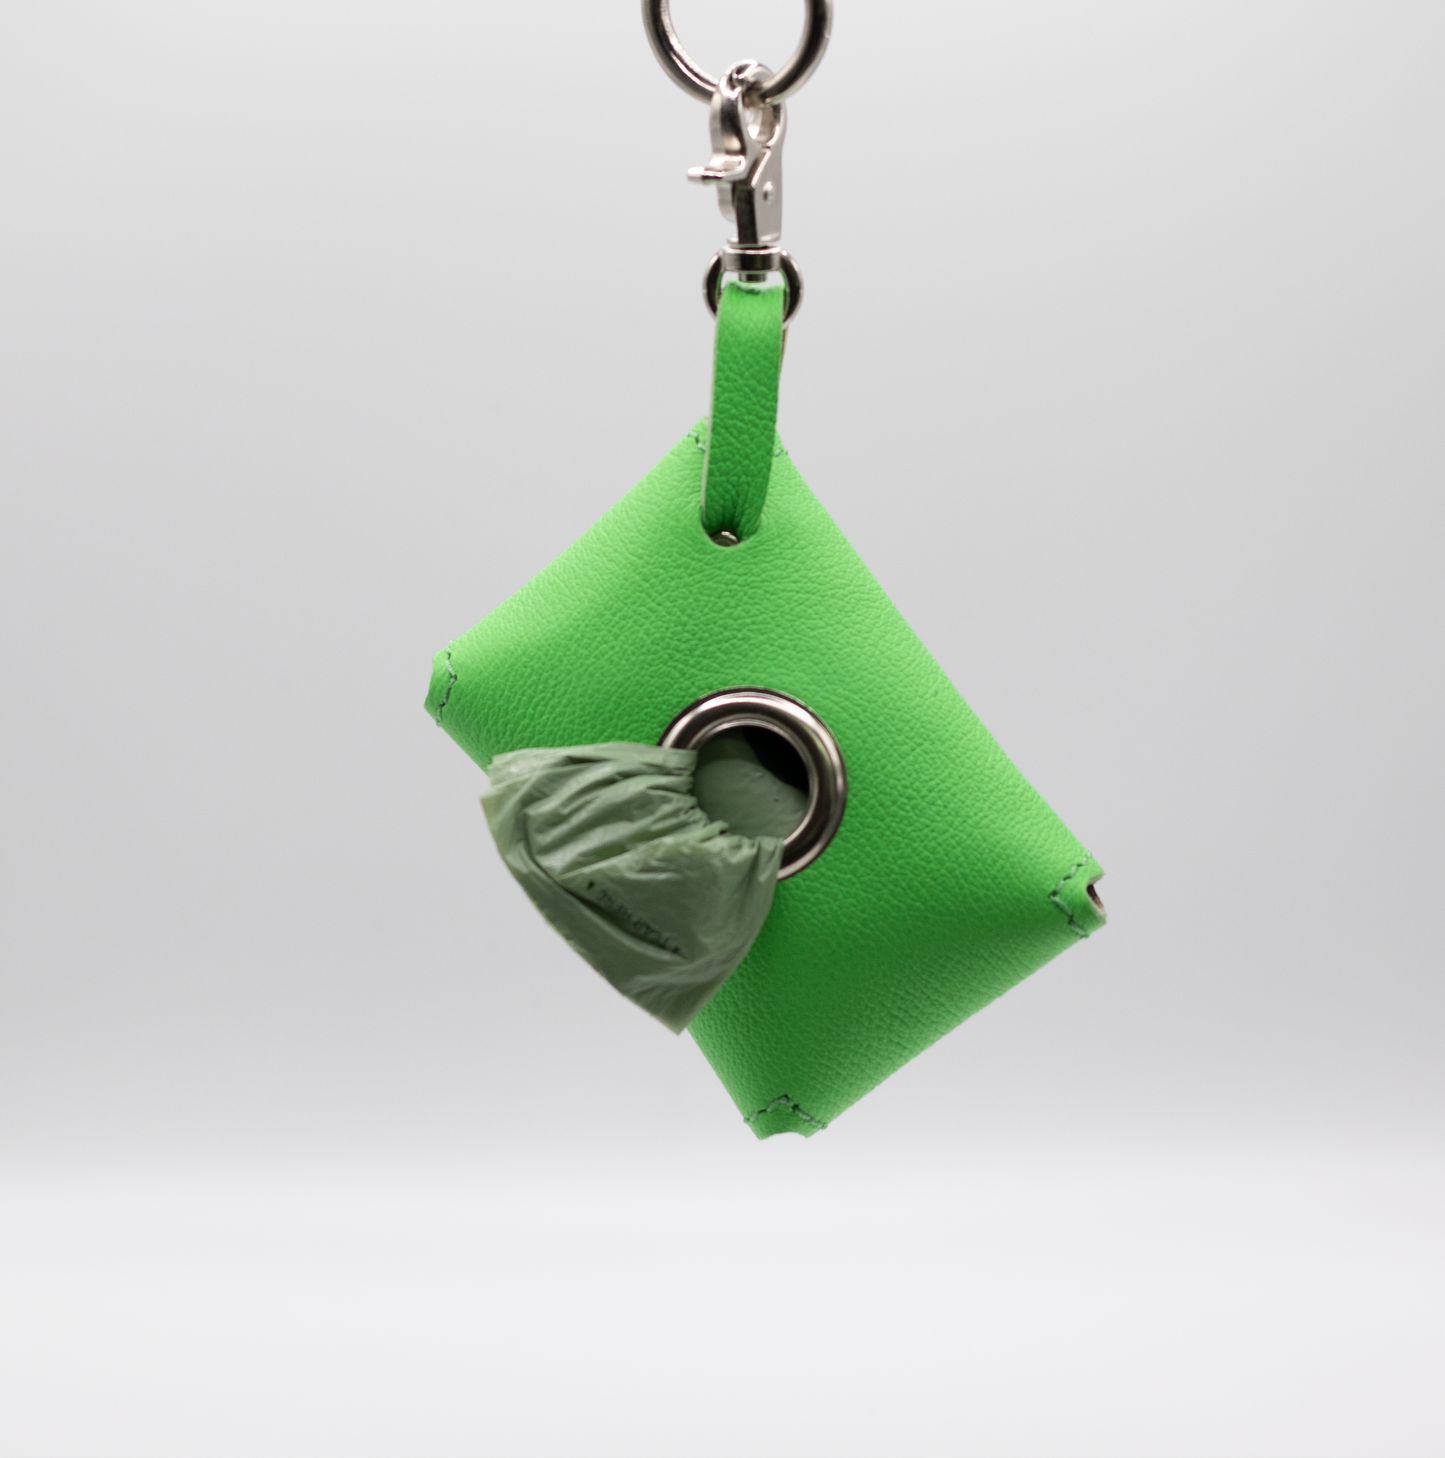 D&H PooSh - Soft Leather Poo Bag Dispenser Green